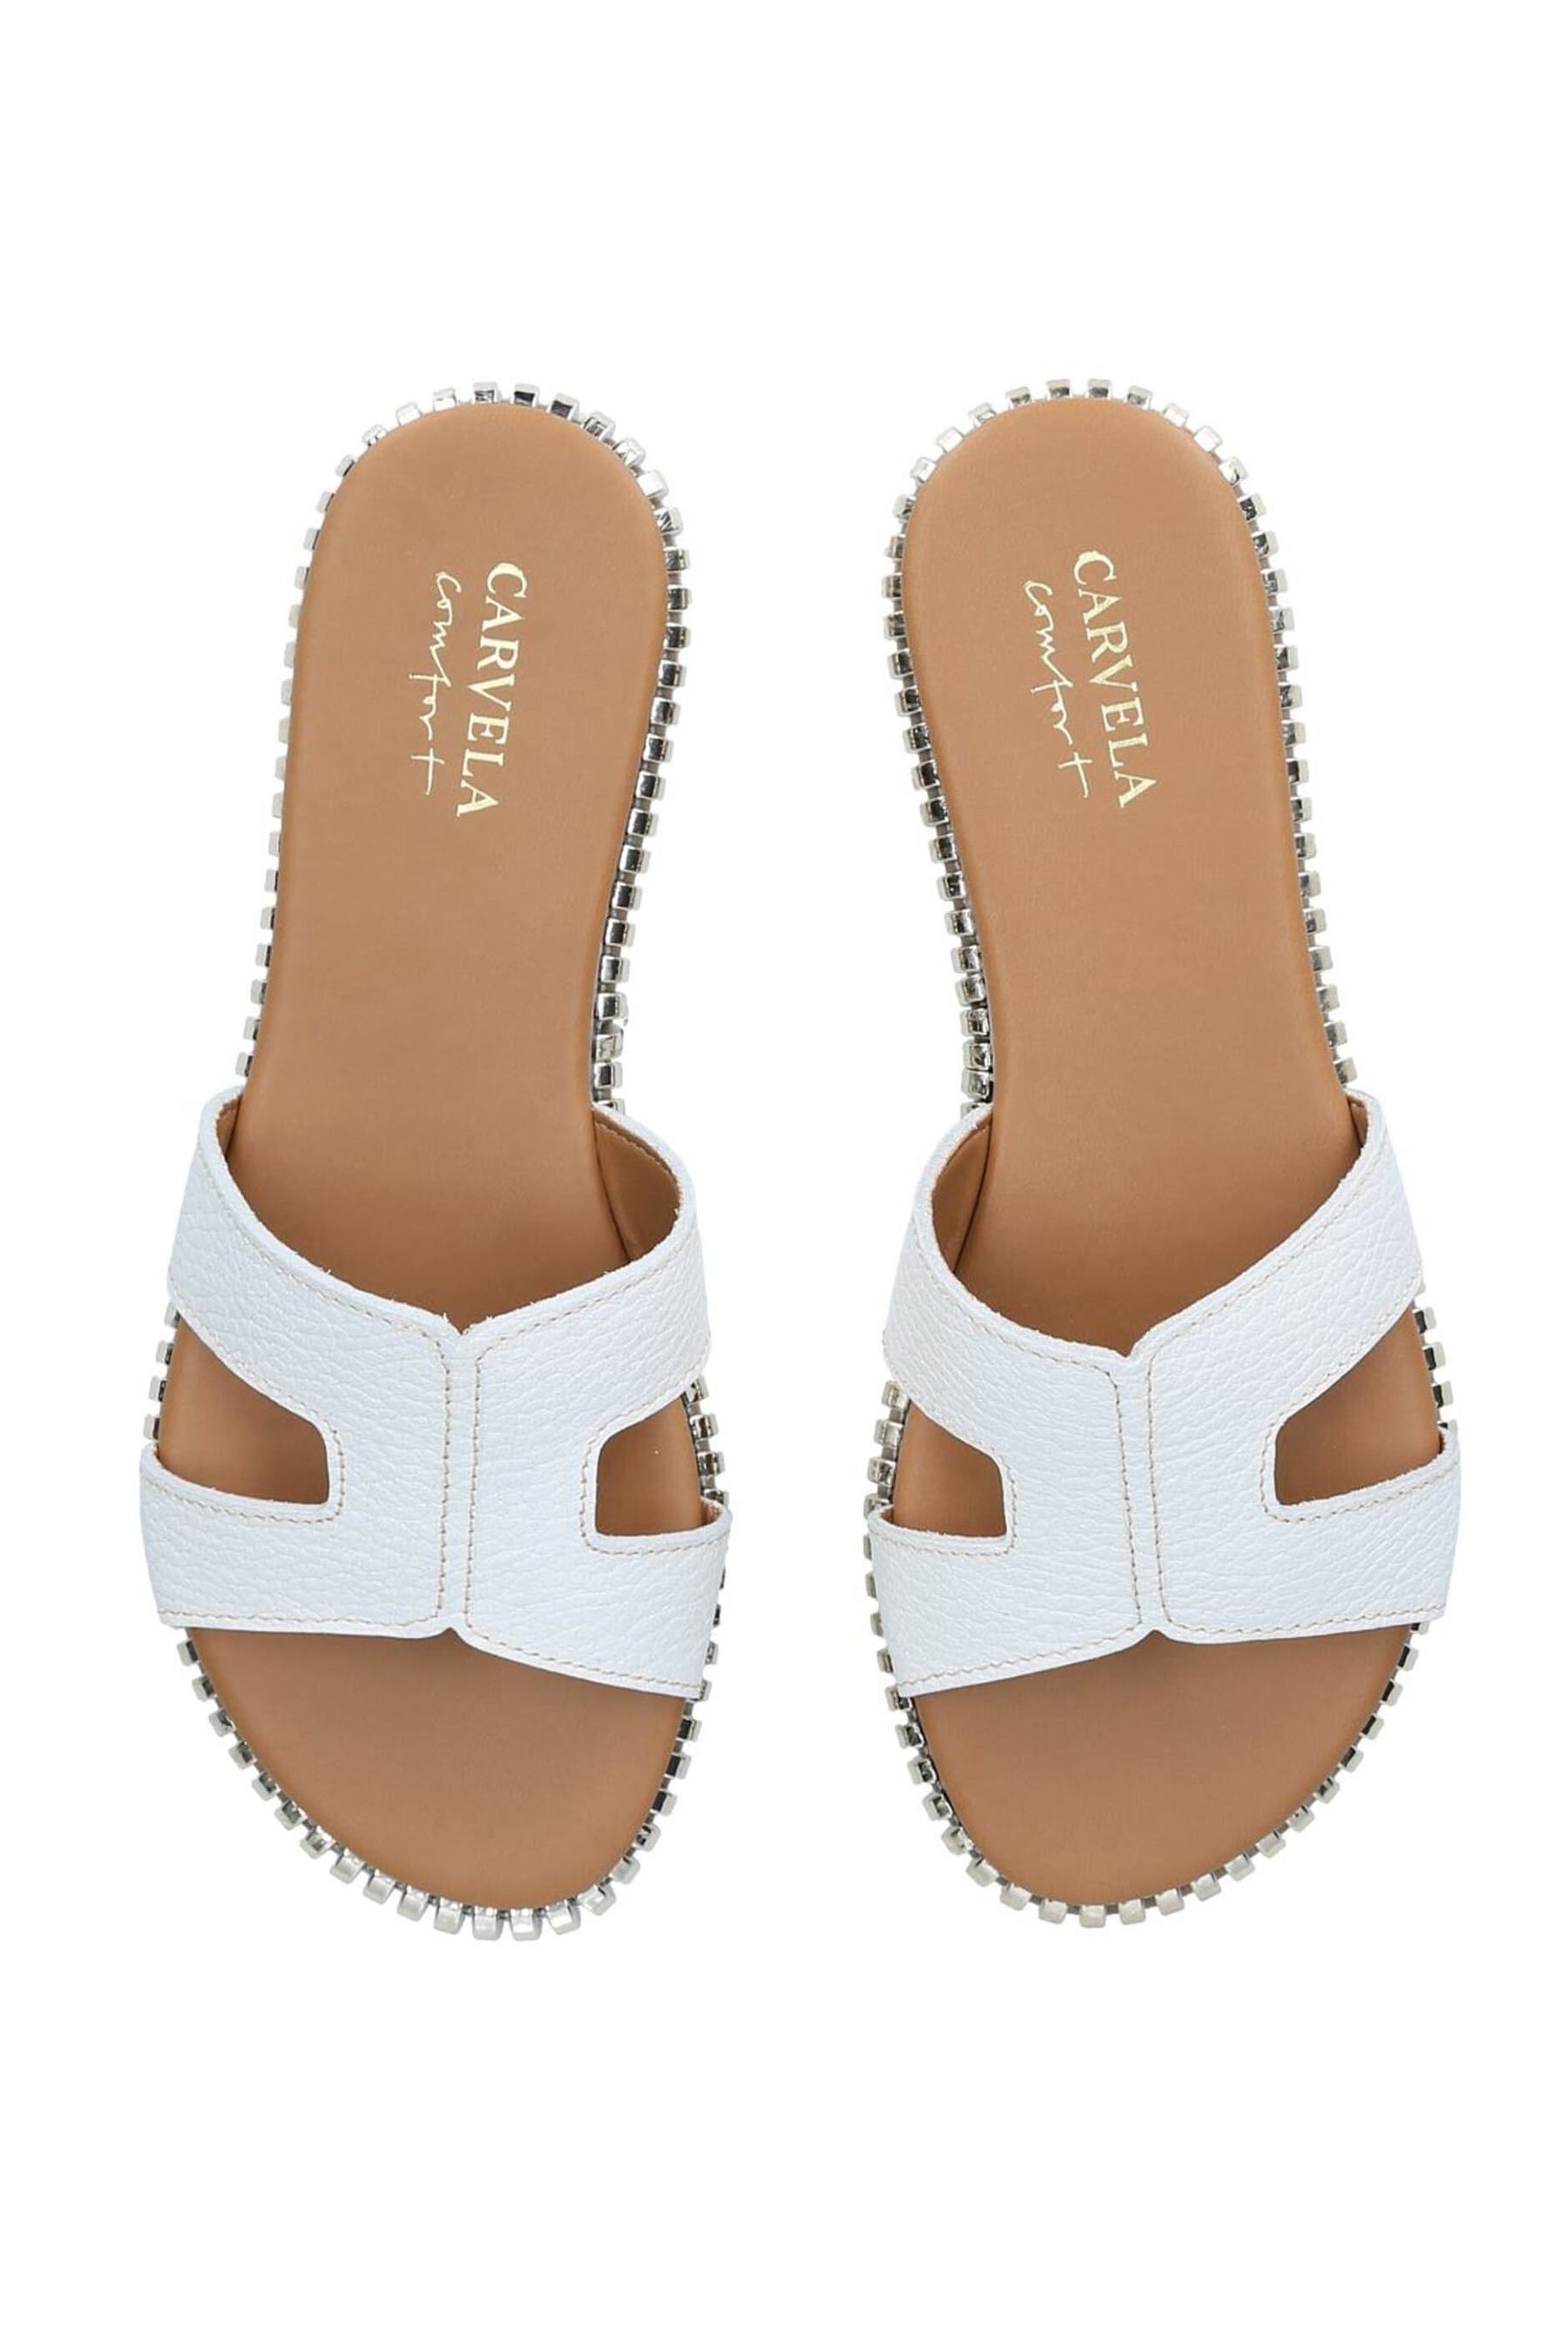 Buy Carvela Comfort White Sophia Sandals from the Next UK online shop